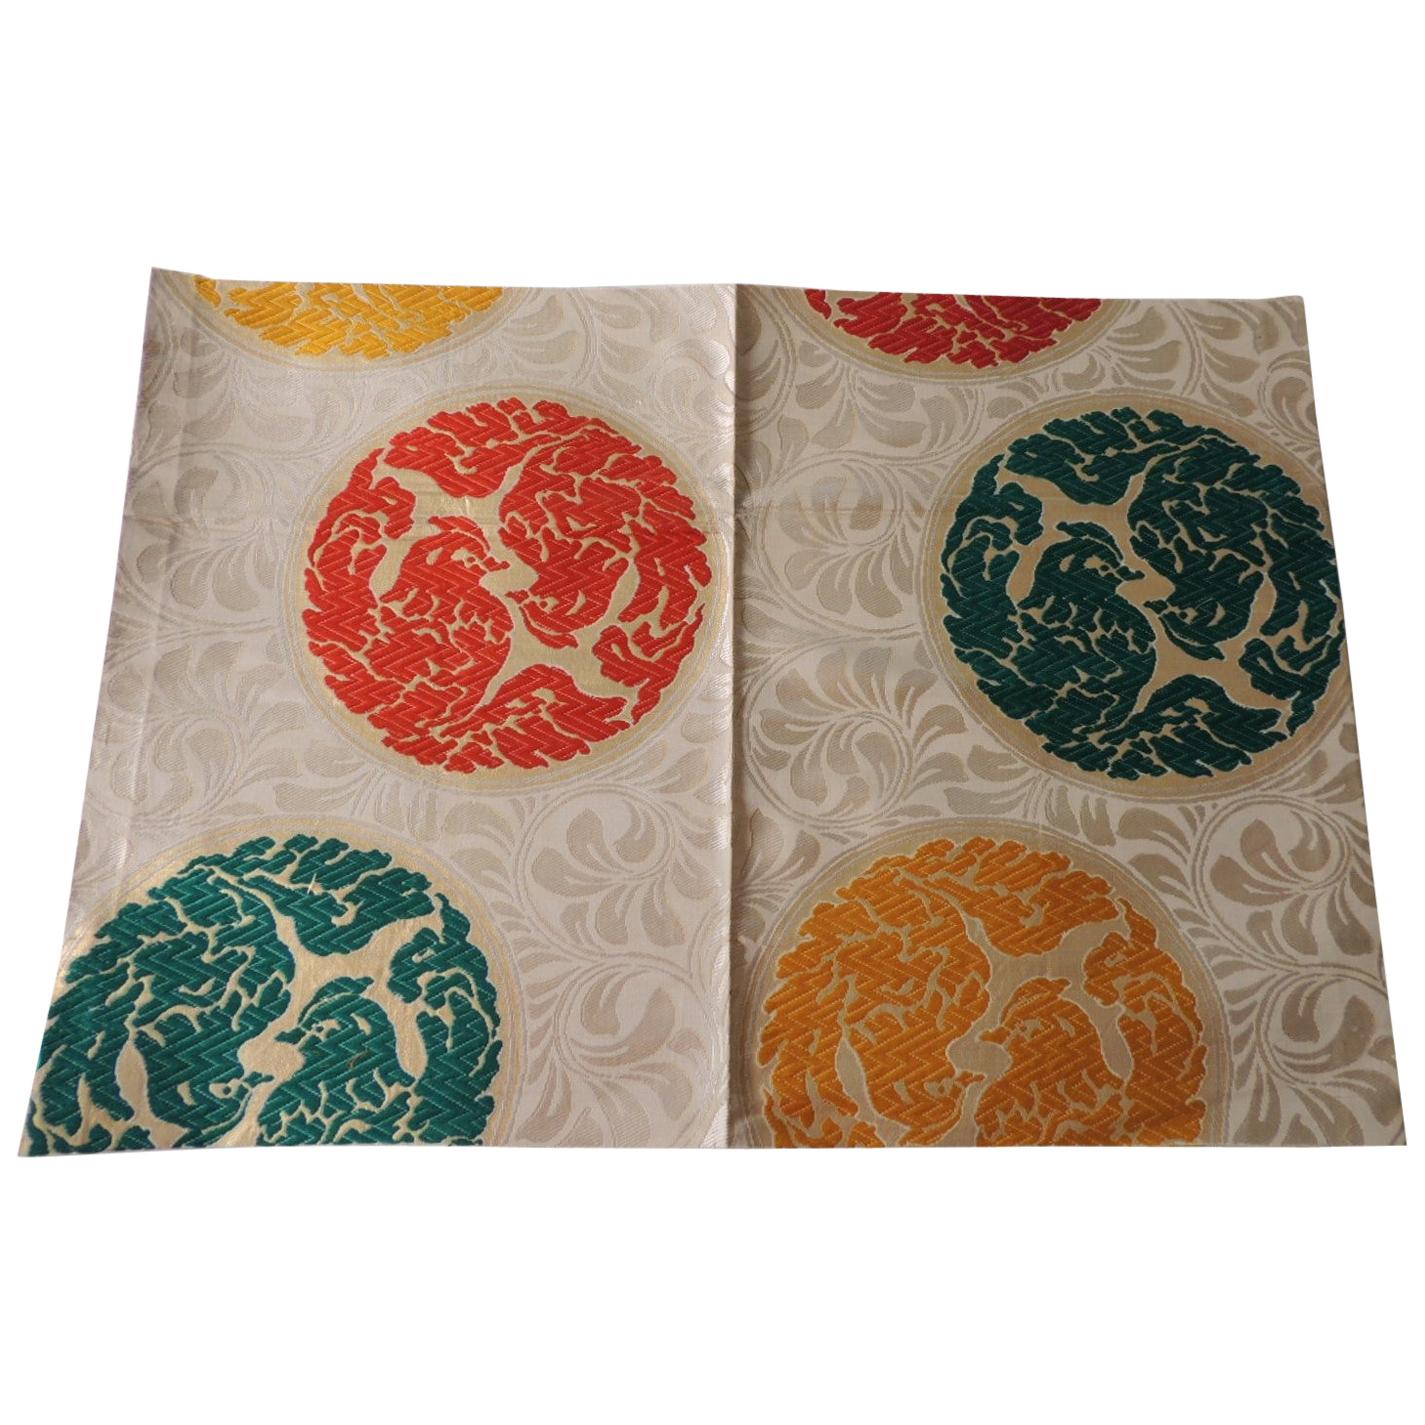 Vintage Orange and Green Silk Obi Textile with Medallions Fragment